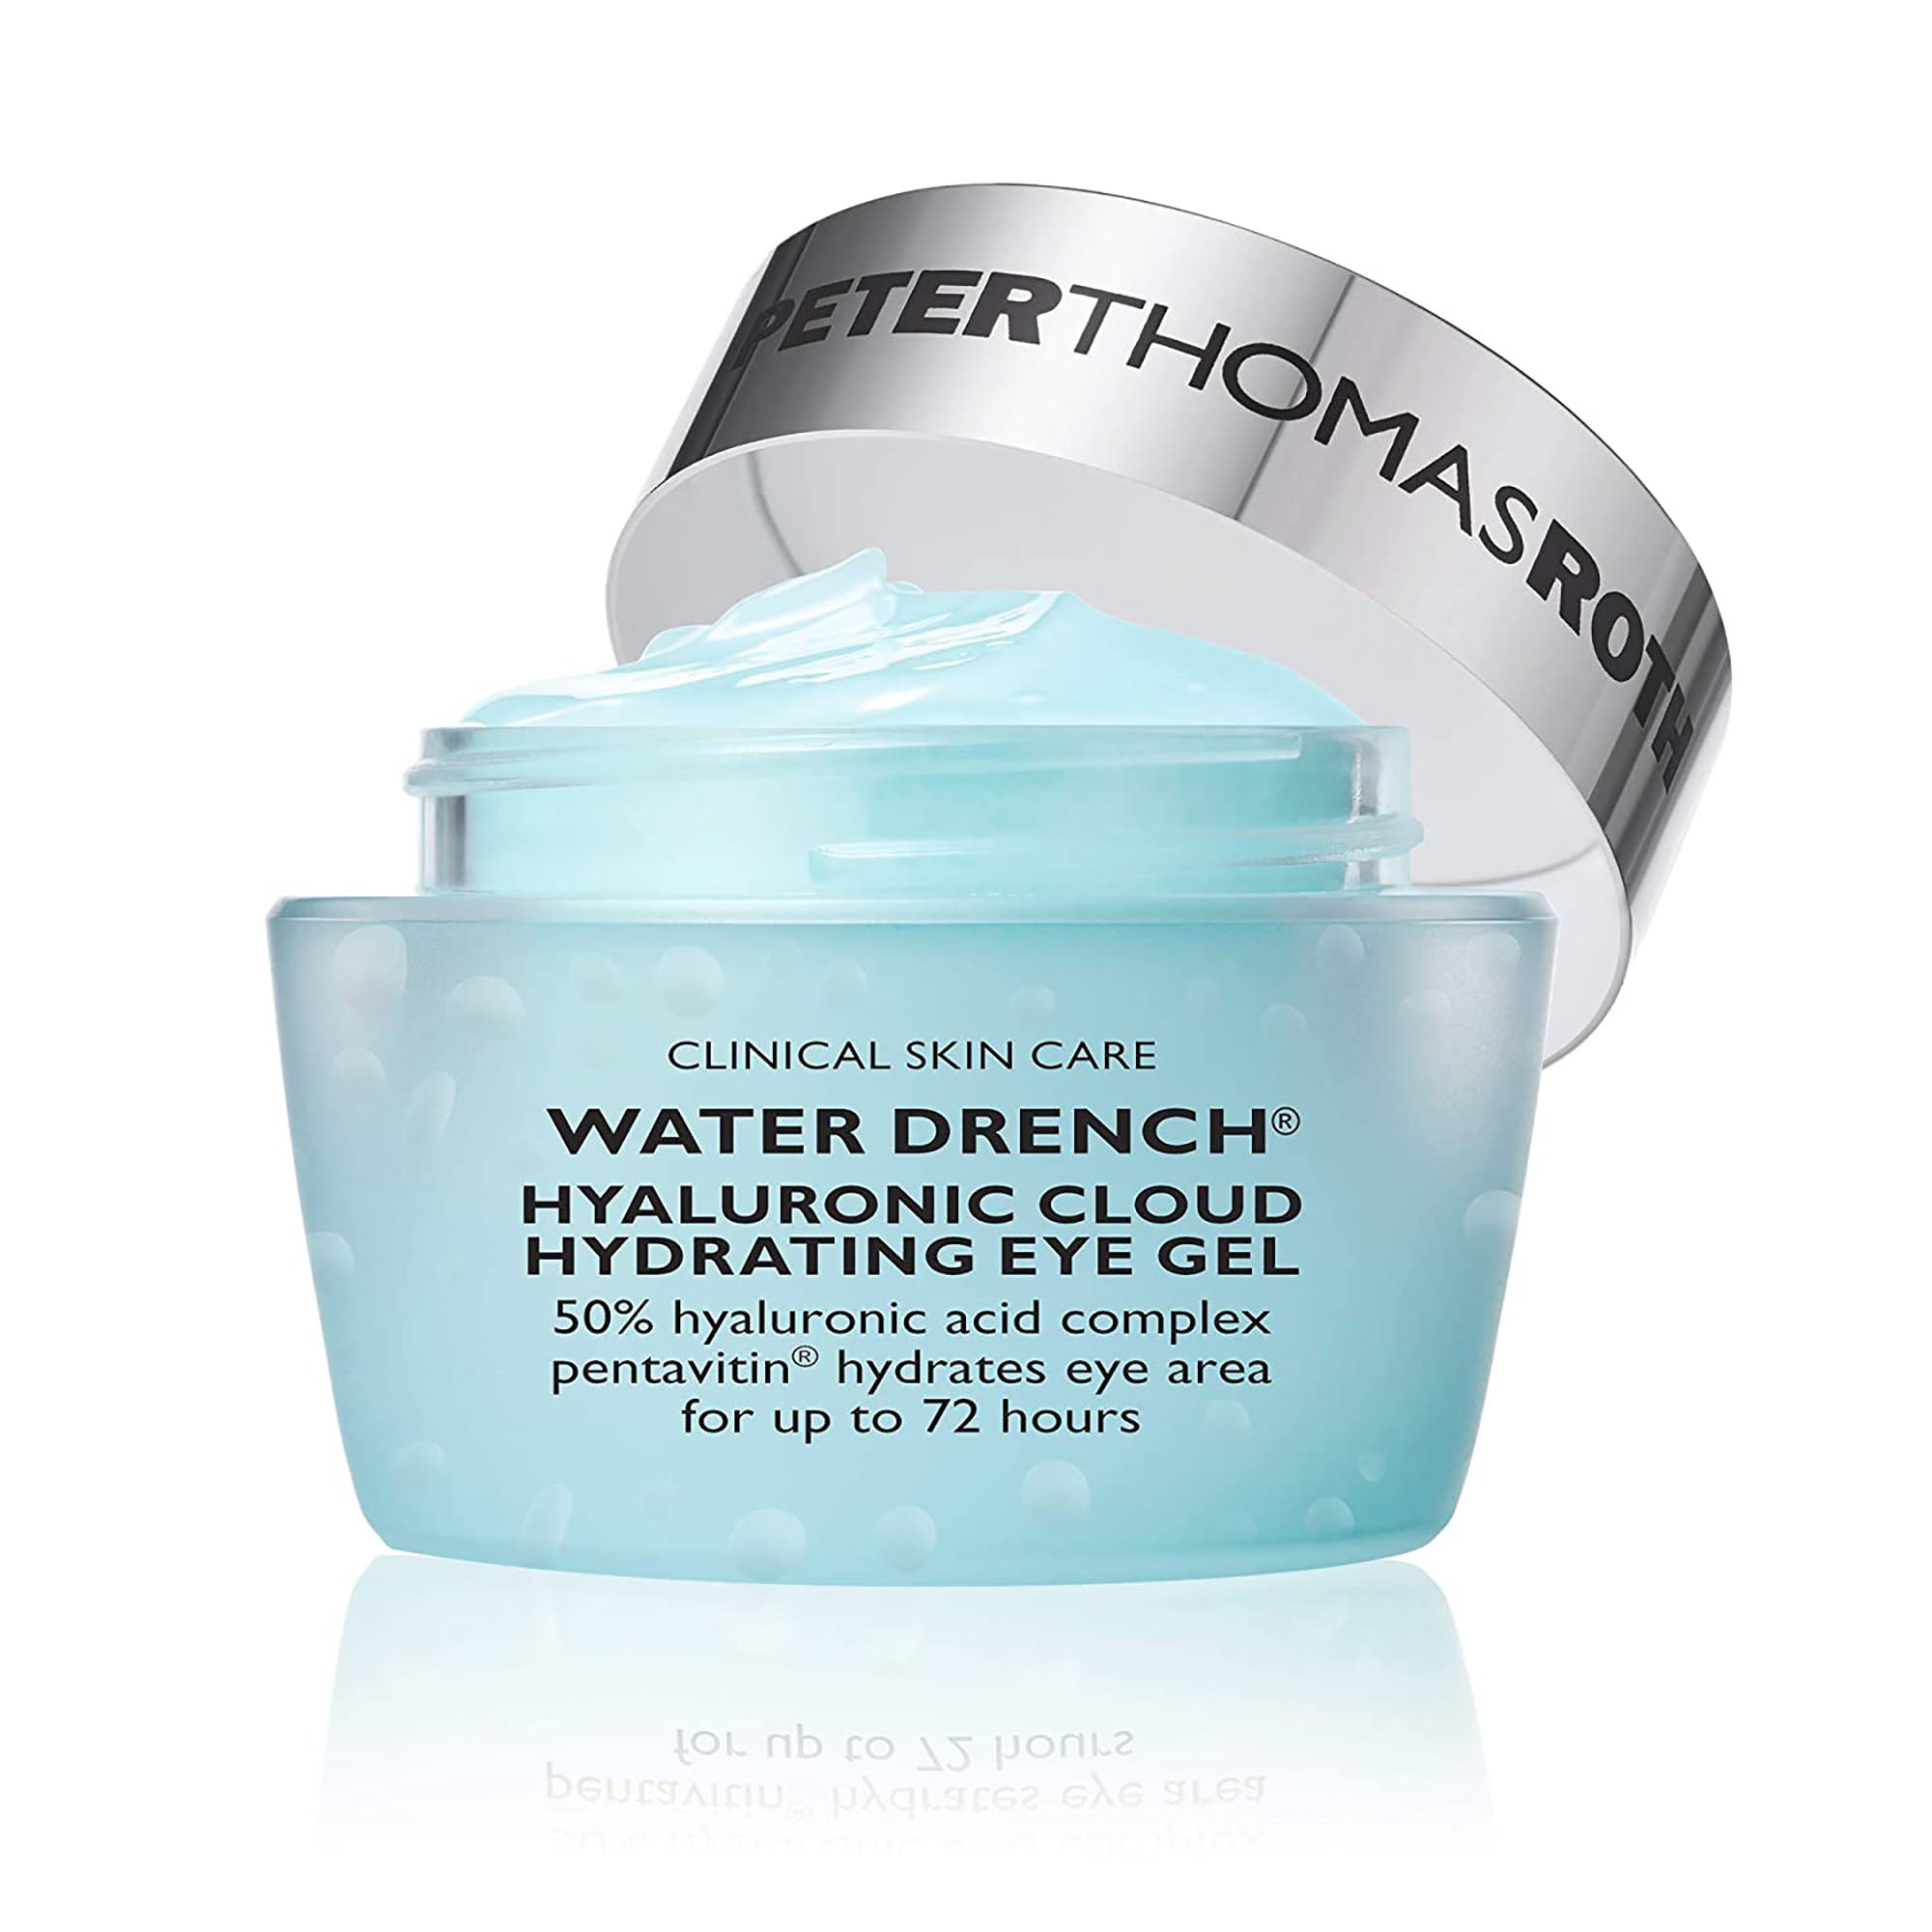 Peter Thomas Roth Water Drench Hyaluronic Cloud Hydrating Eye Gel / 0.5OZ